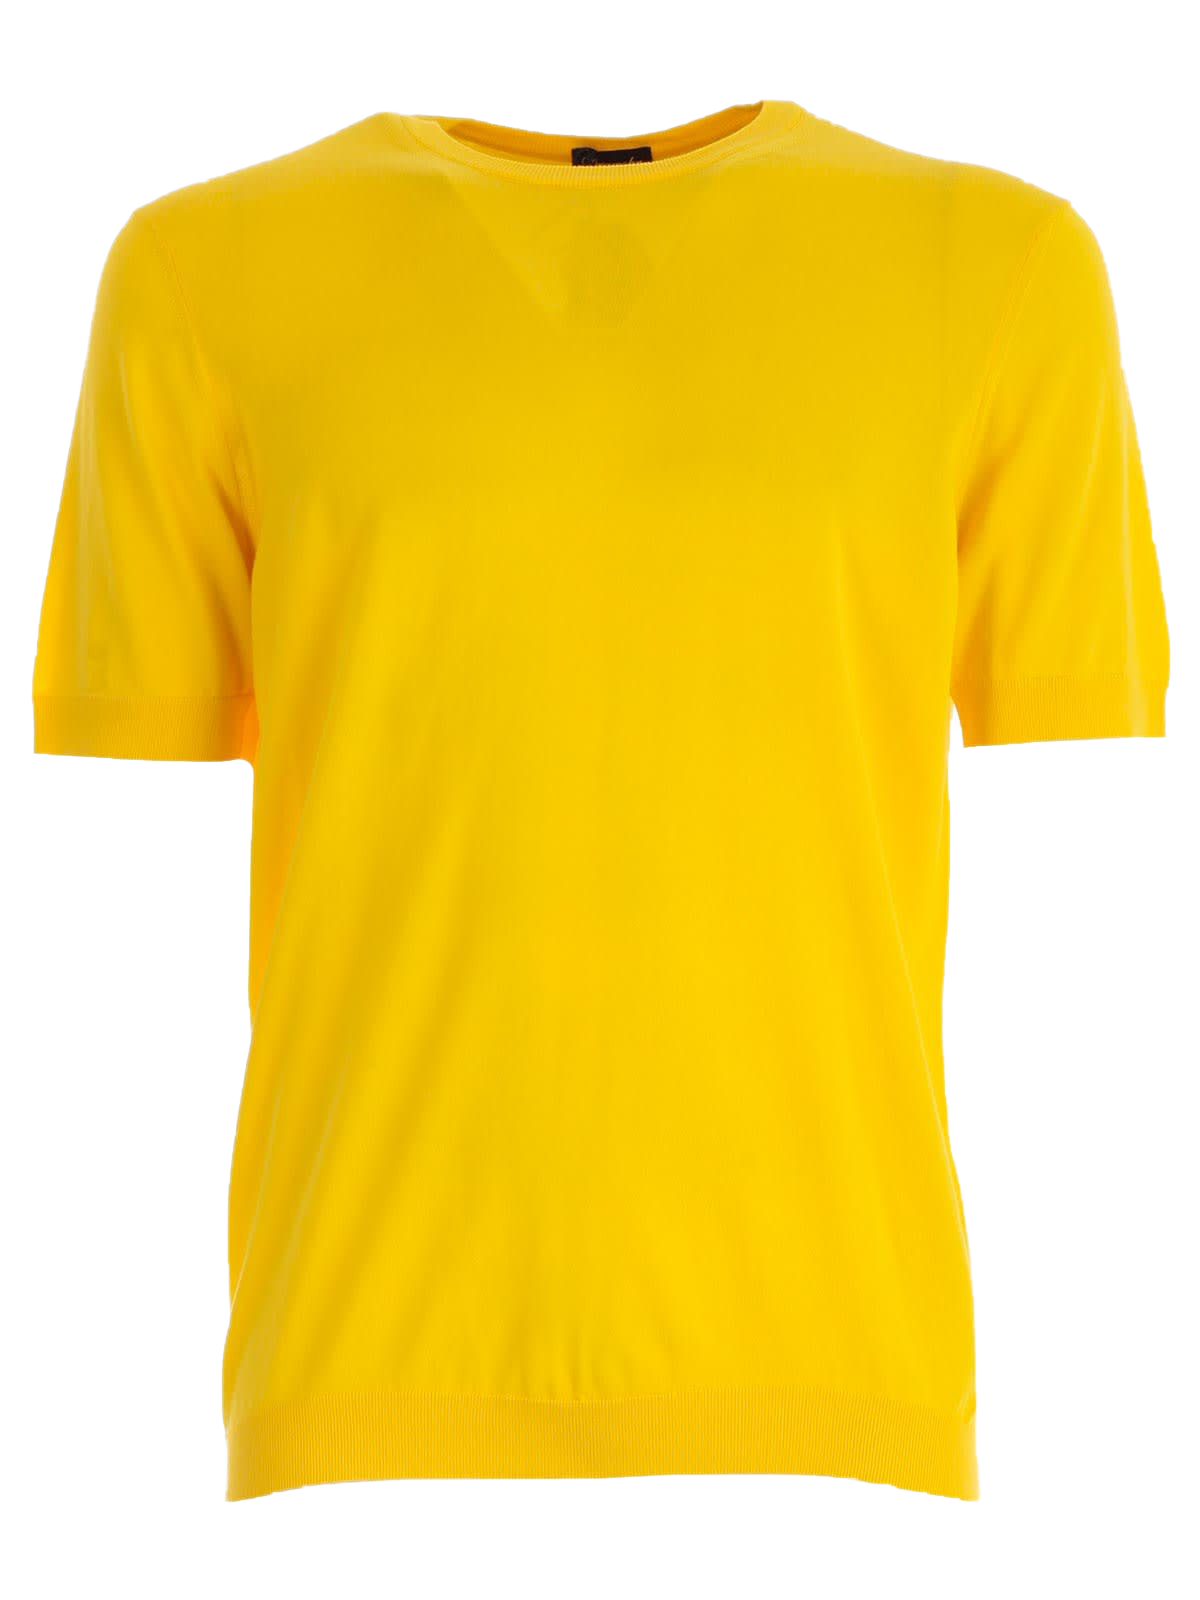 Простая желтая футболка PNG Image